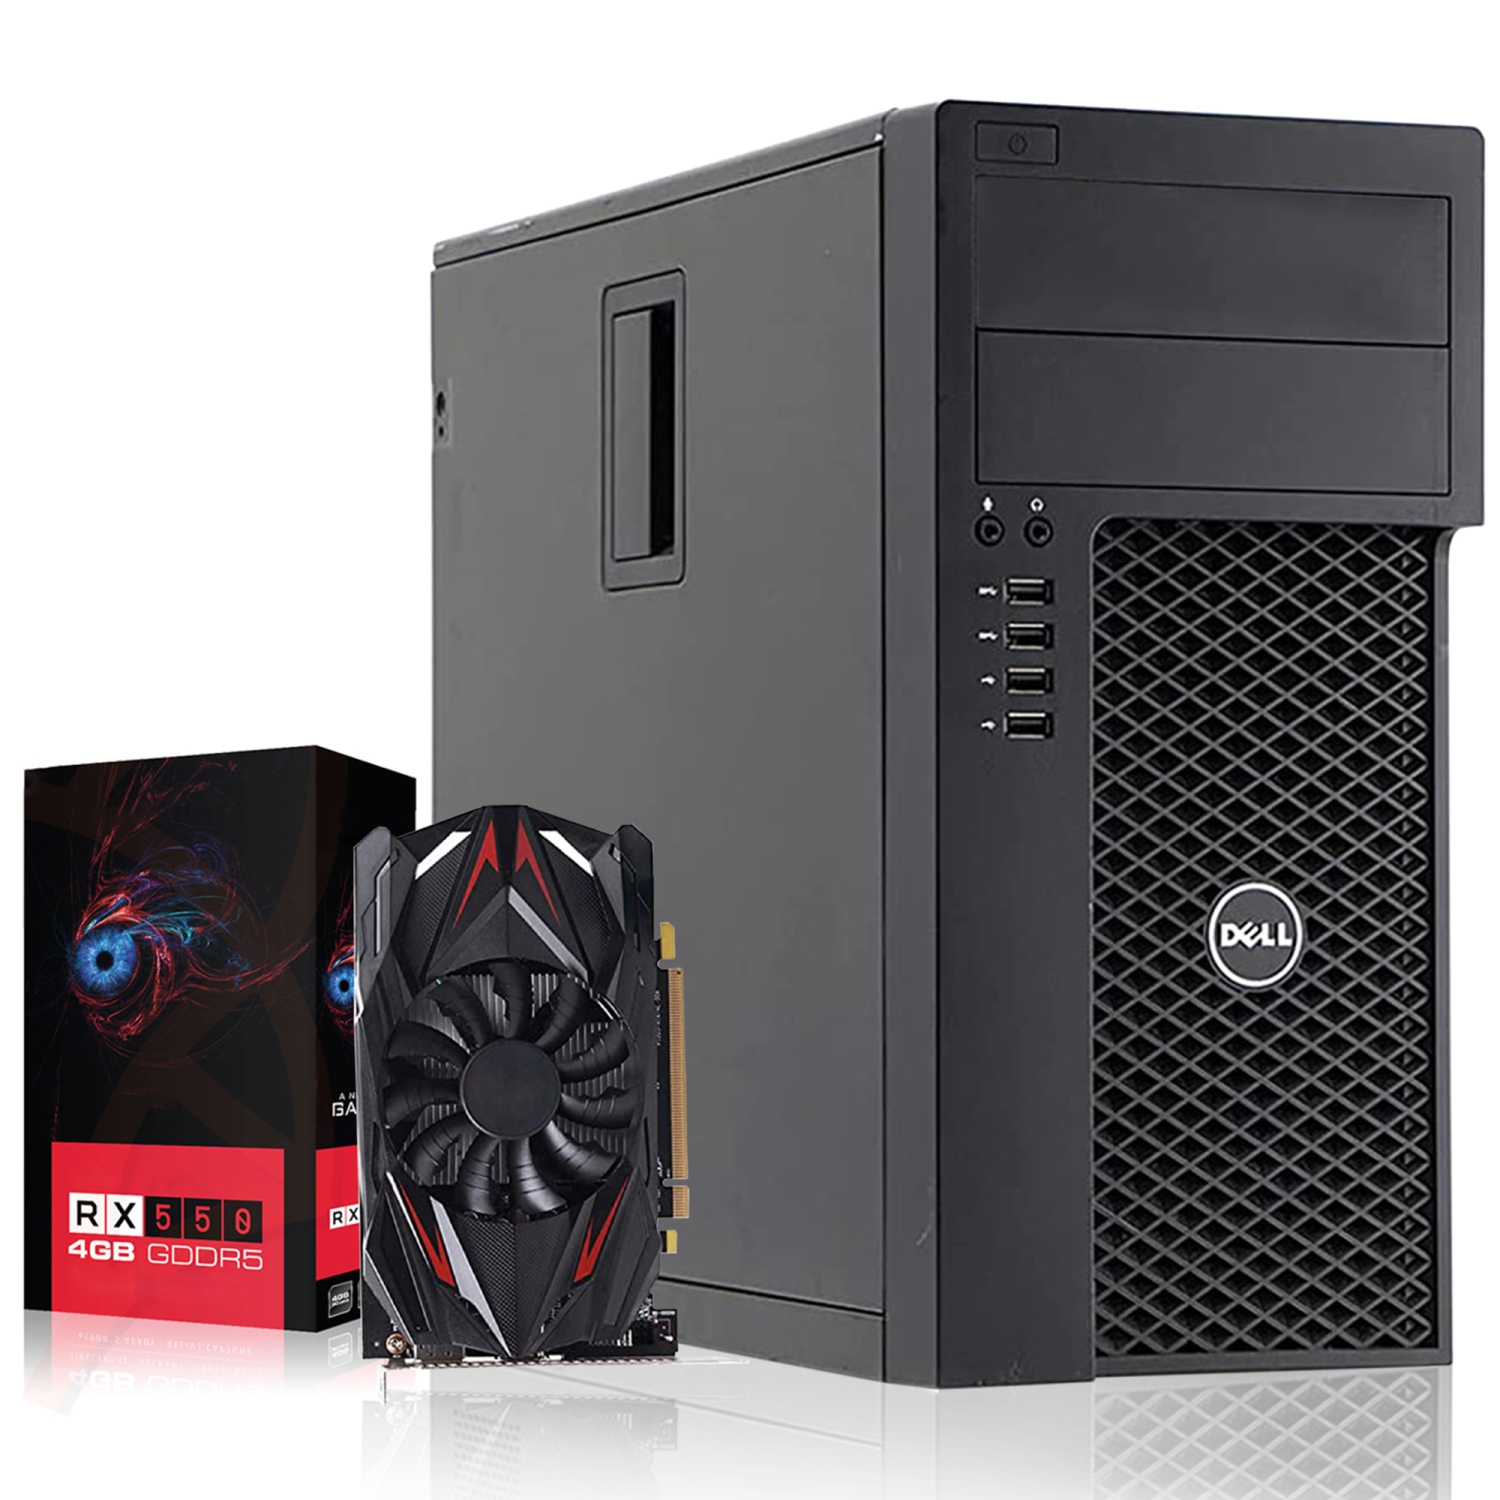 Refurbished (Good) - Dell Precision T1700 Tower Gaming Desktop Computer PC, (Core i7 - 4770 4th GEN/16GB RAM/1TB SSD/RX 550/WINDOWS 10 PRO) Intel Processor - Black